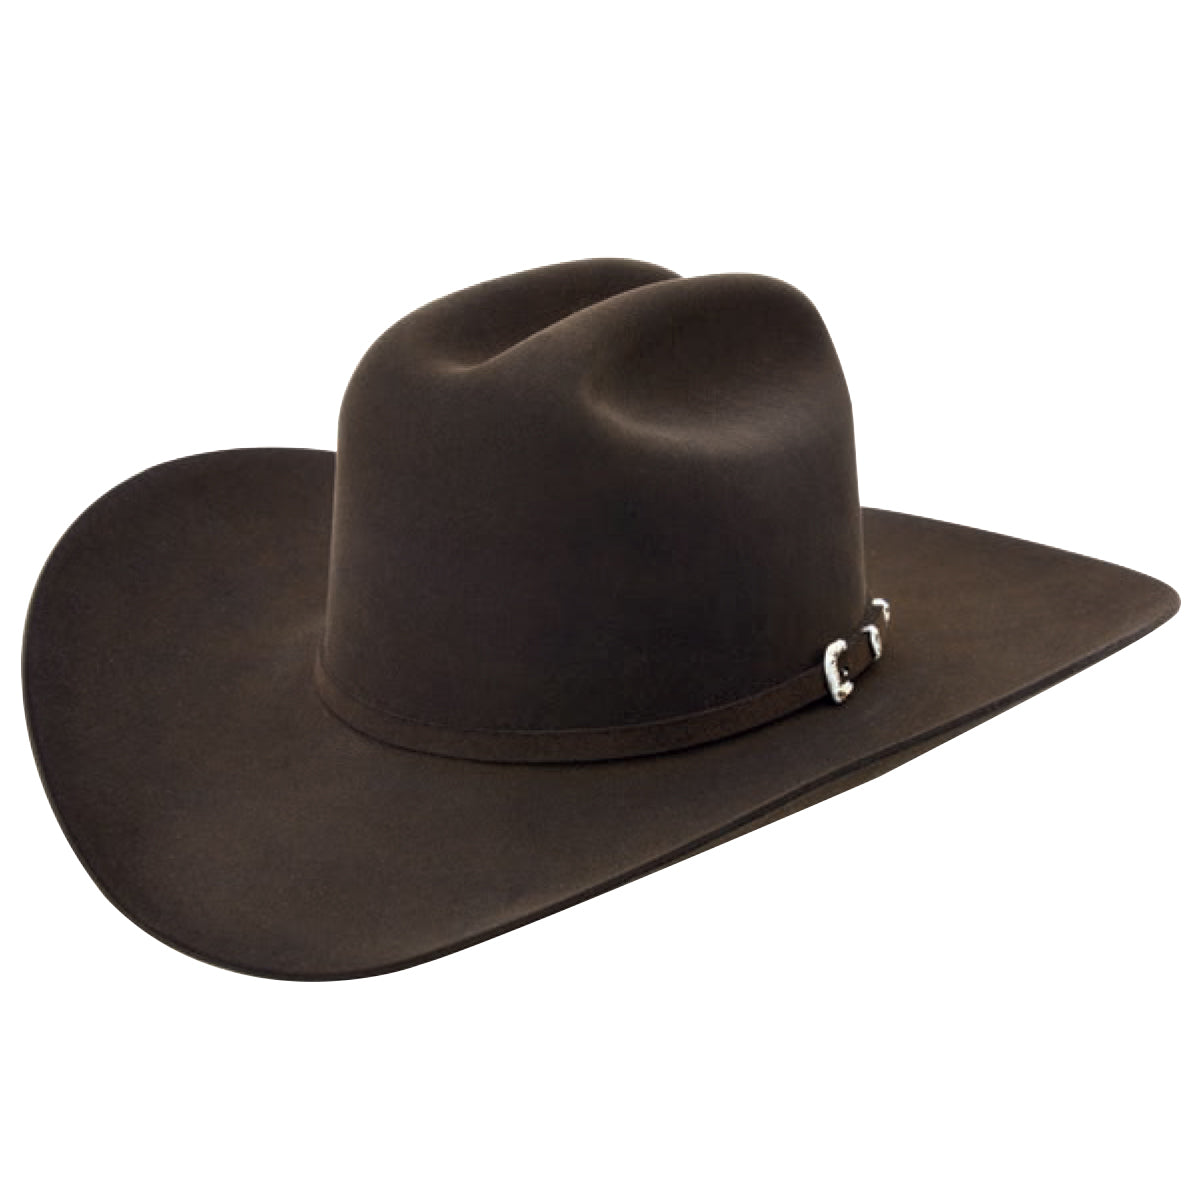 Abolengo 1000x Brown Felt Cowboy Hat